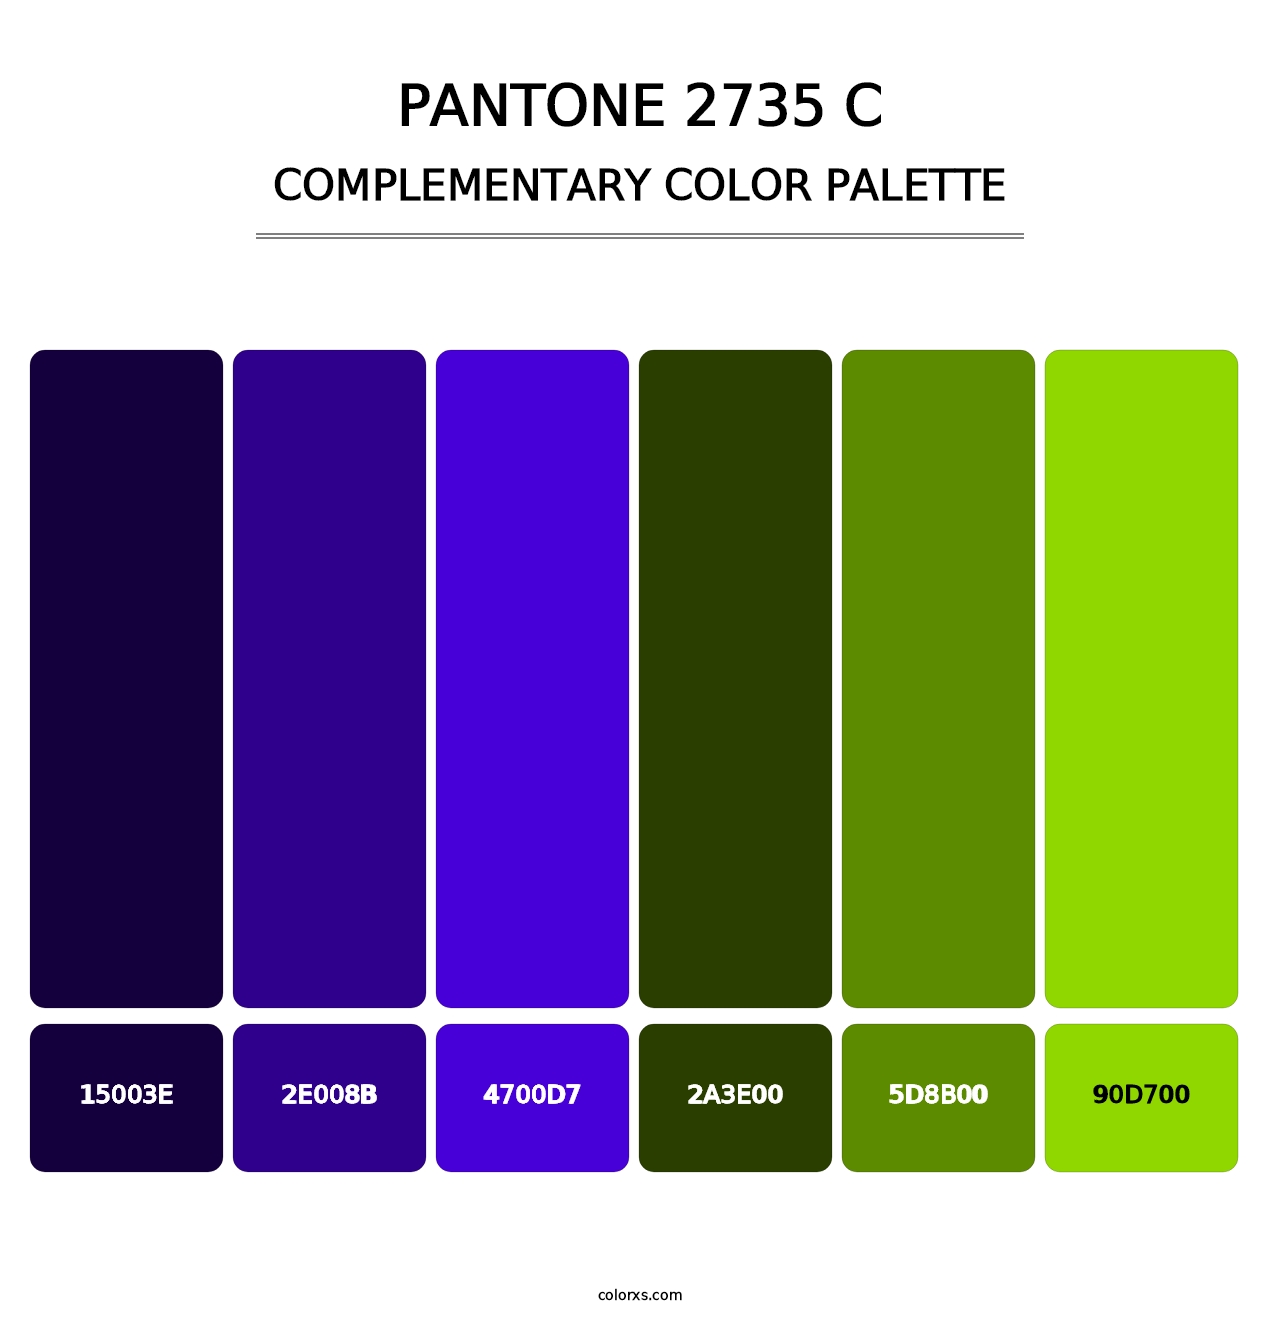 PANTONE 2735 C - Complementary Color Palette